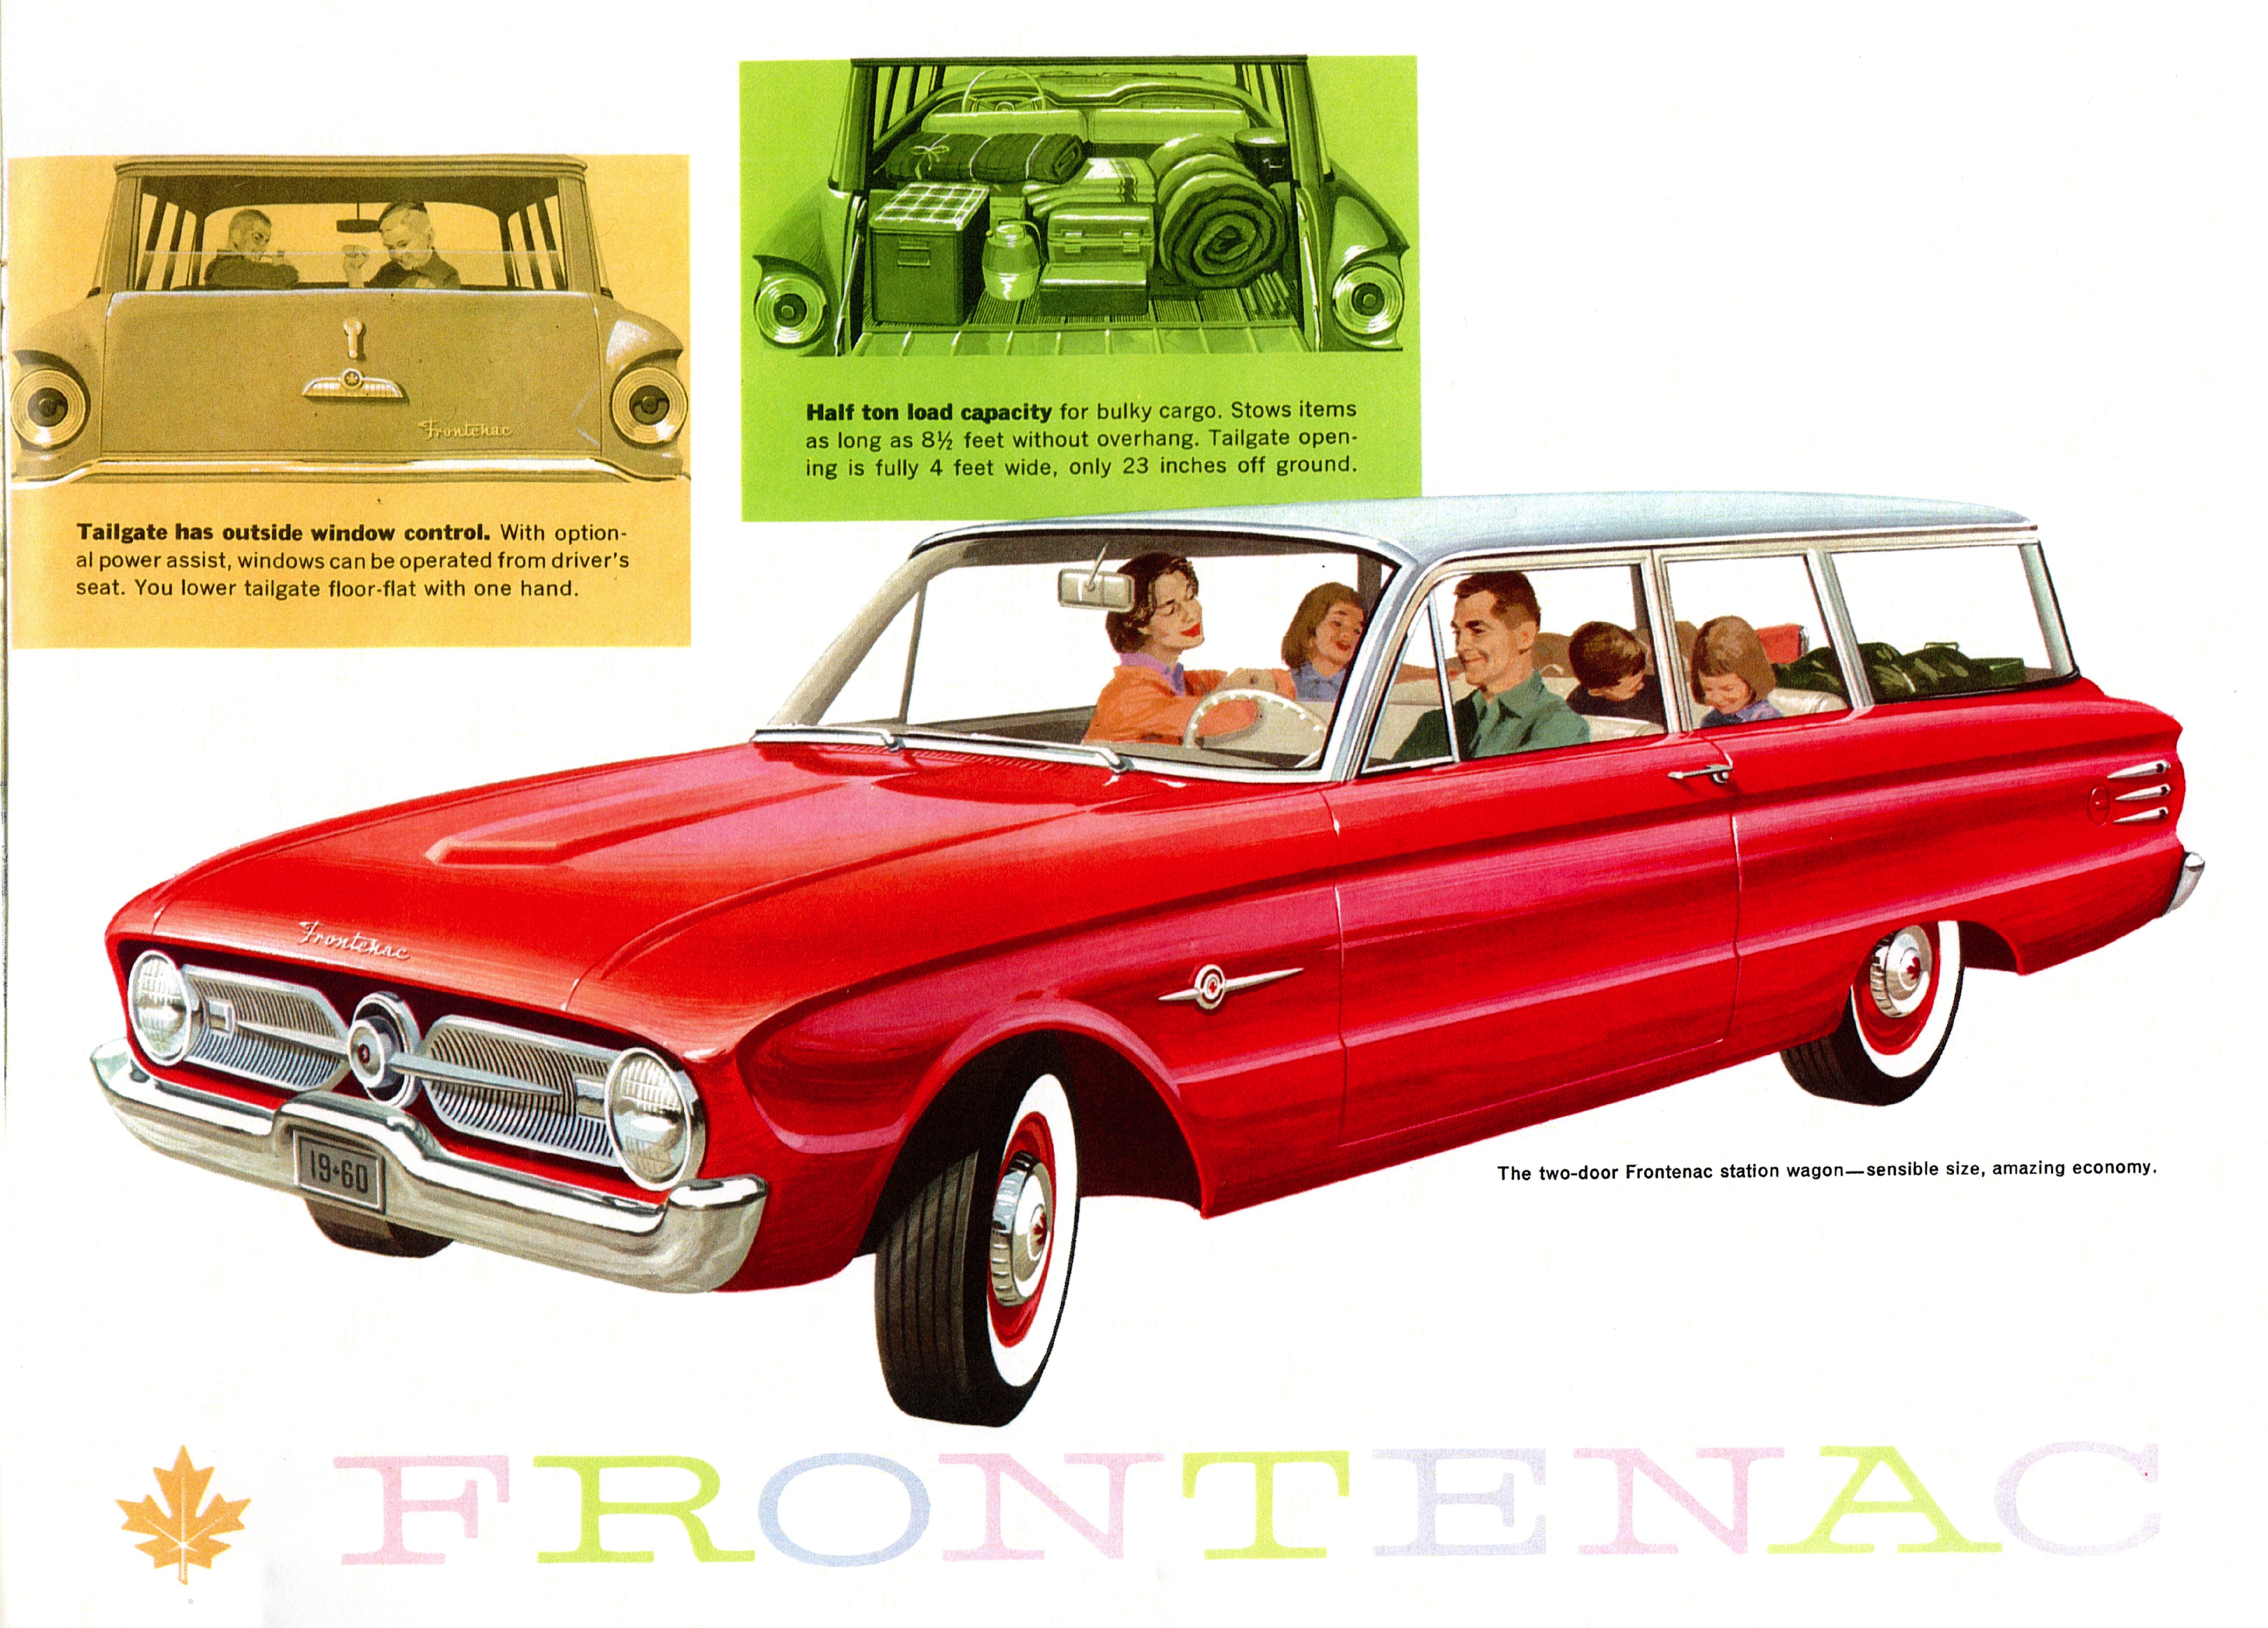 Car advertisement from 1960. Long description available.